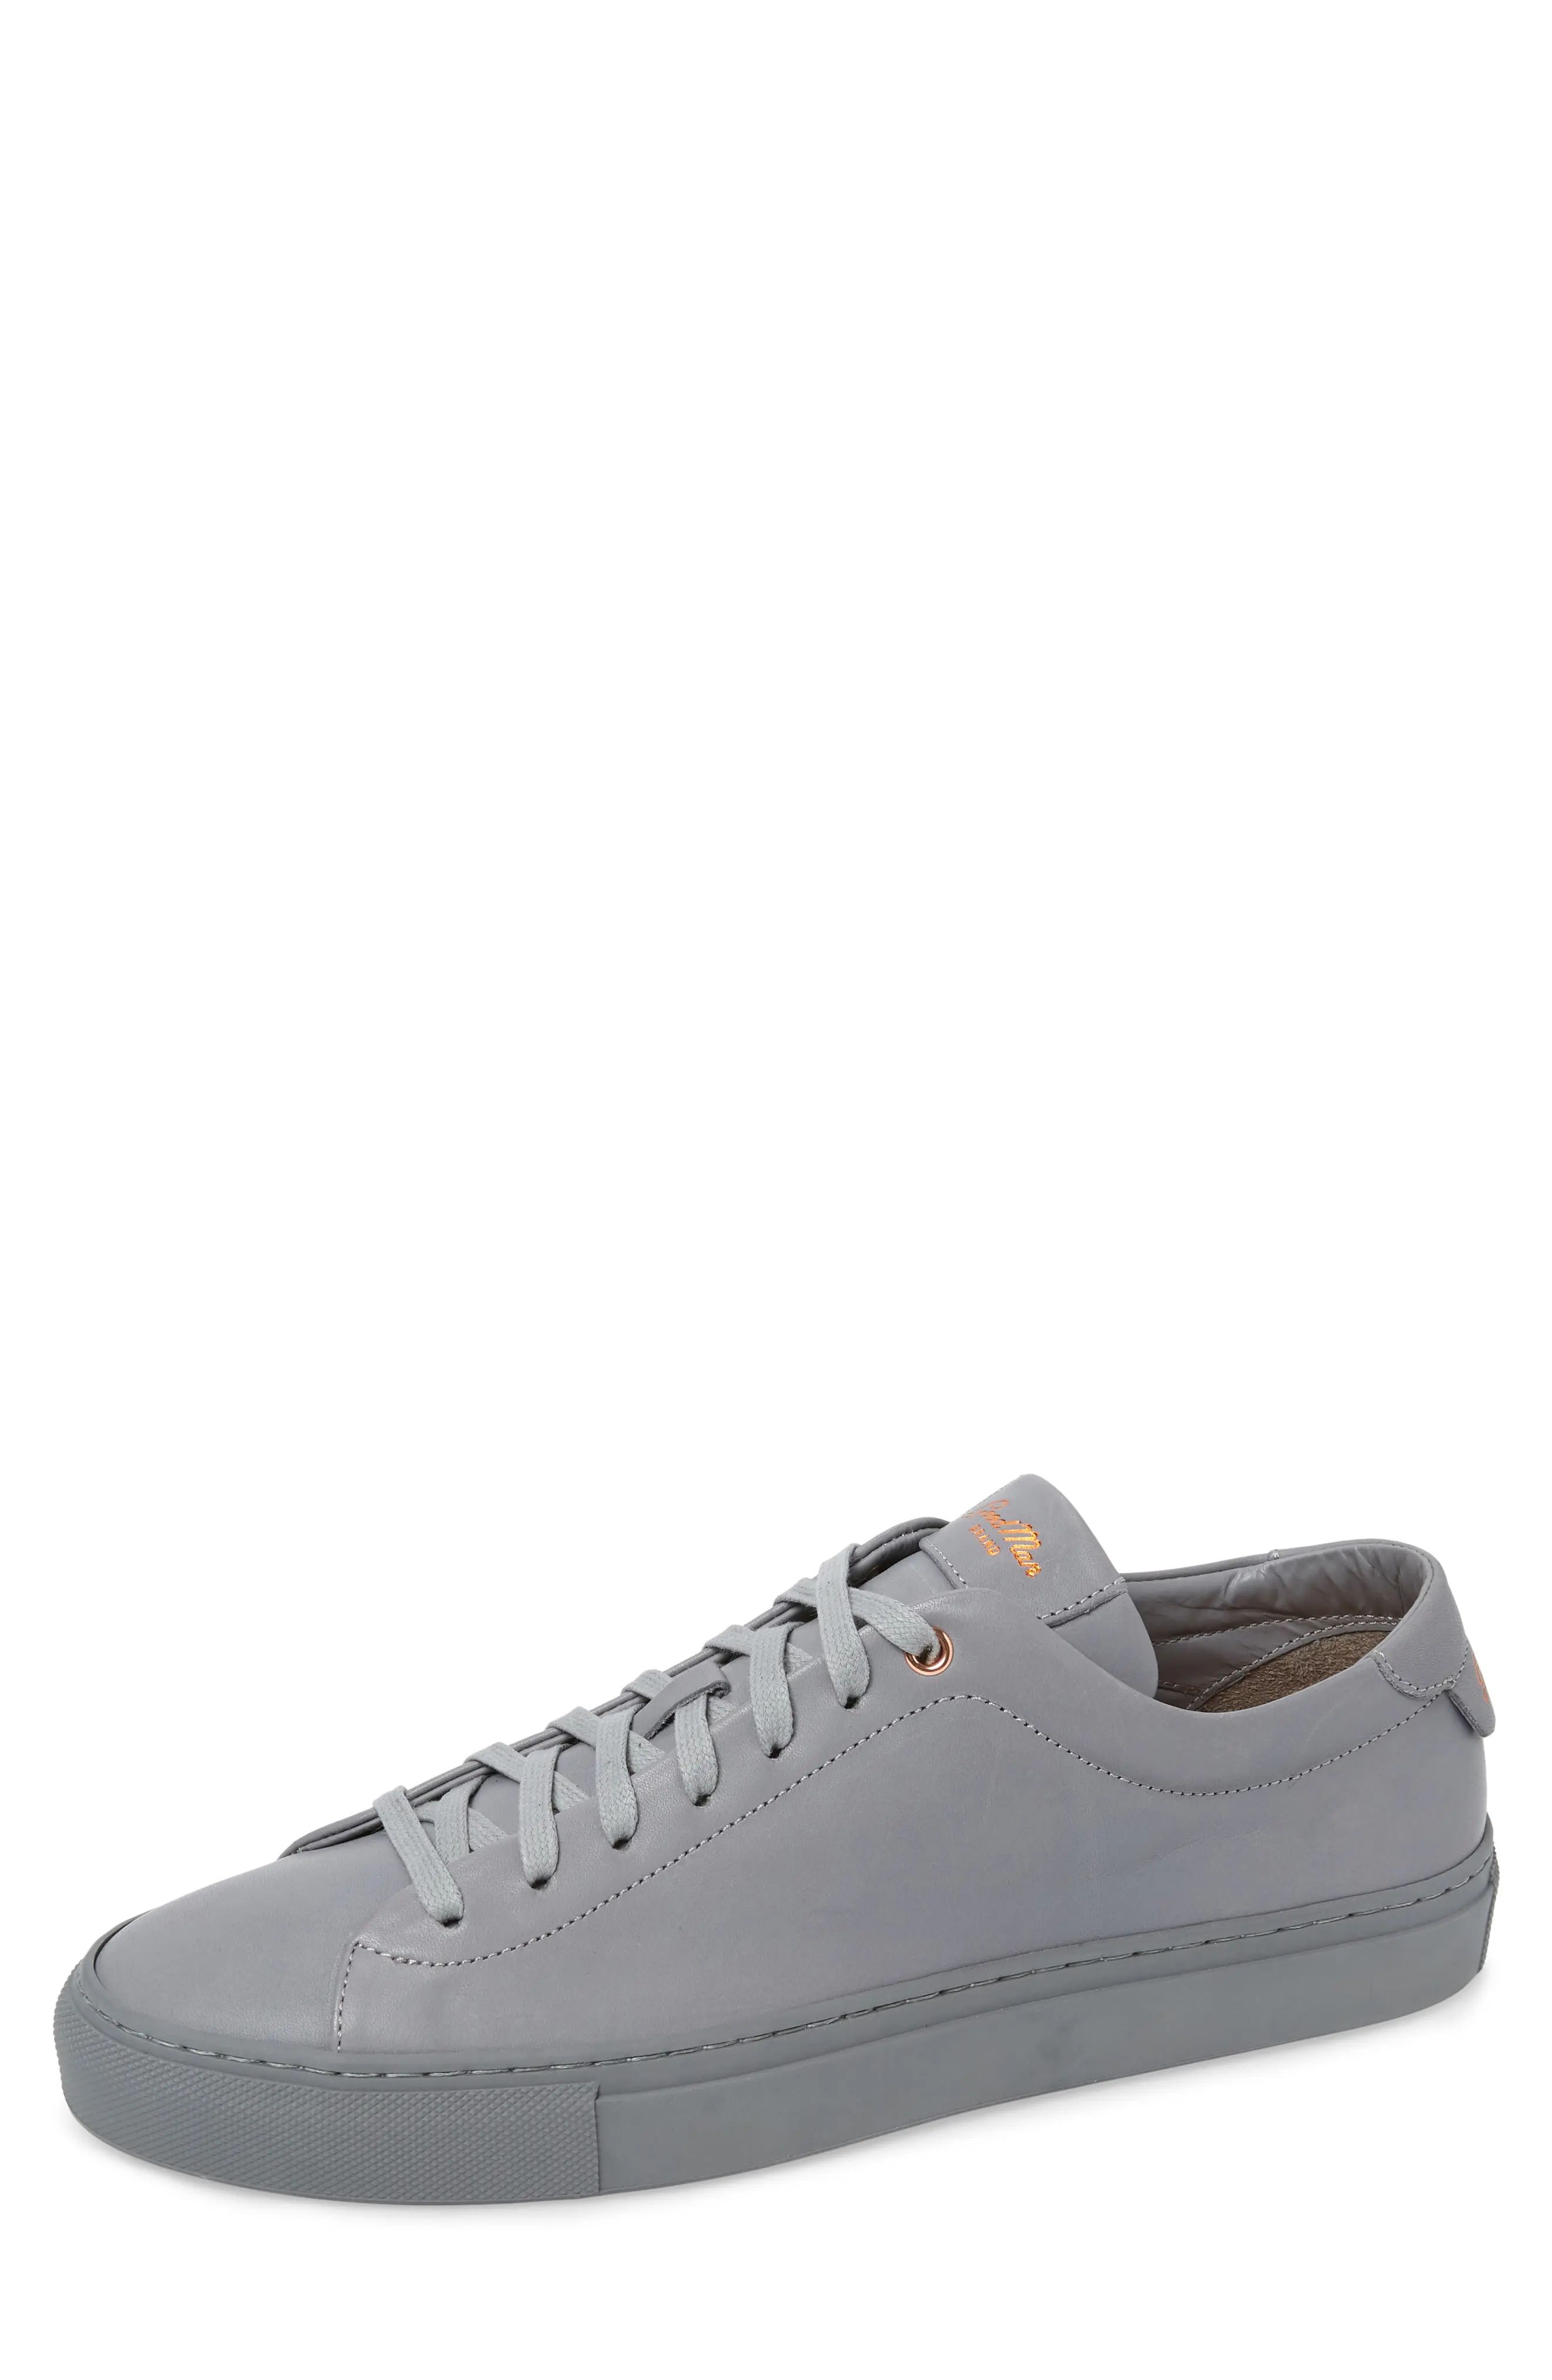 Men's Good Man Brand Edge Sneaker, Size 11 M - Grey | Nordstrom